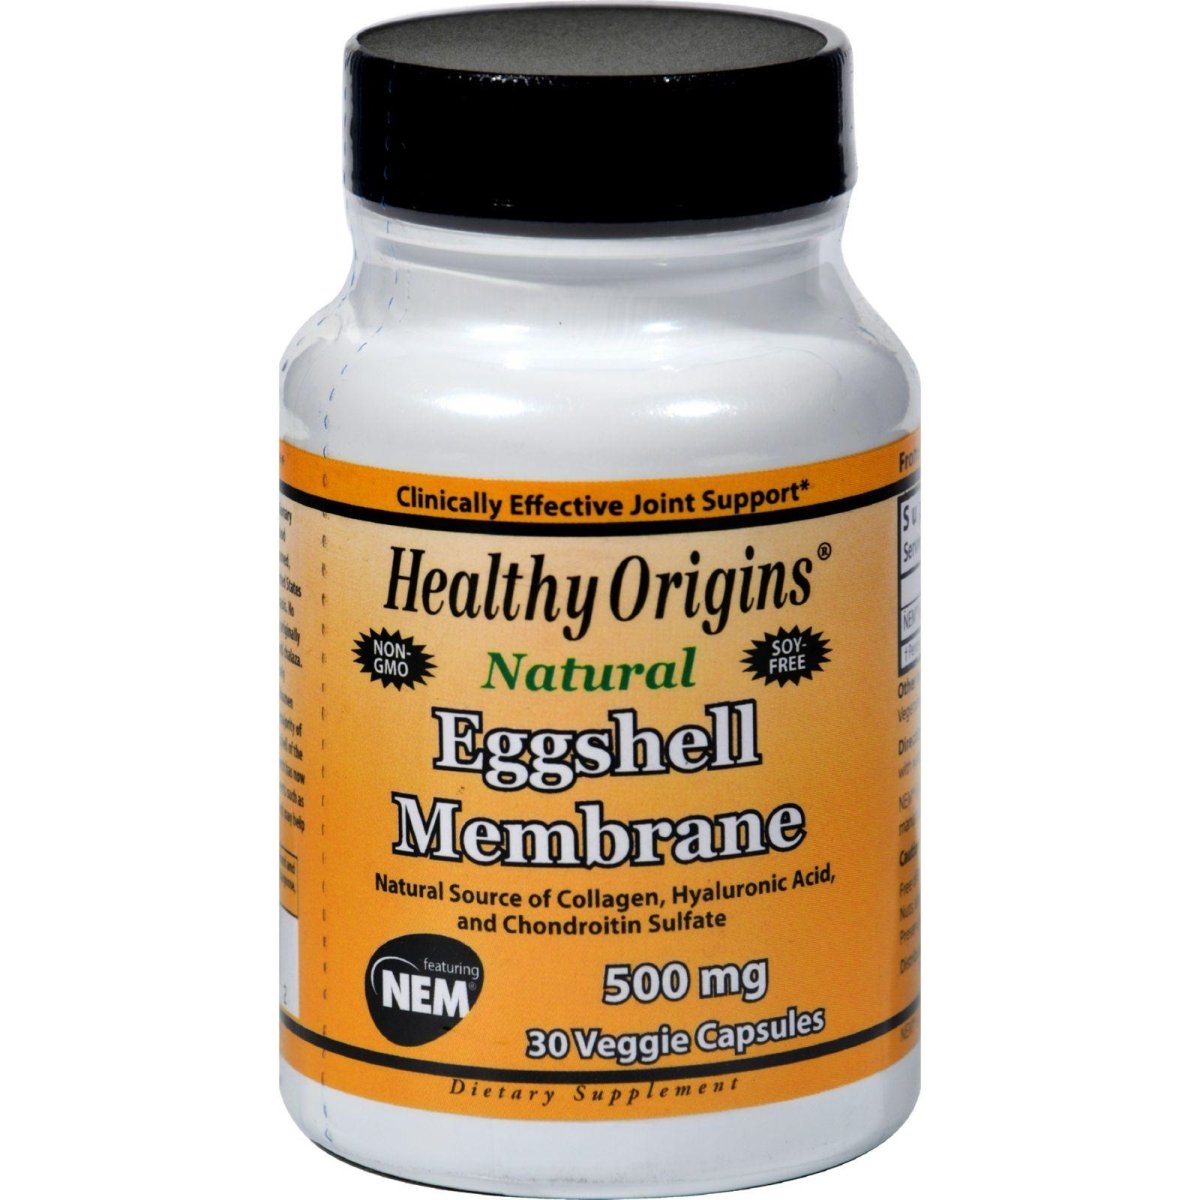 Hg1502004 500 Mg Eggshell Membrane - 30 Vegetarian Capsules